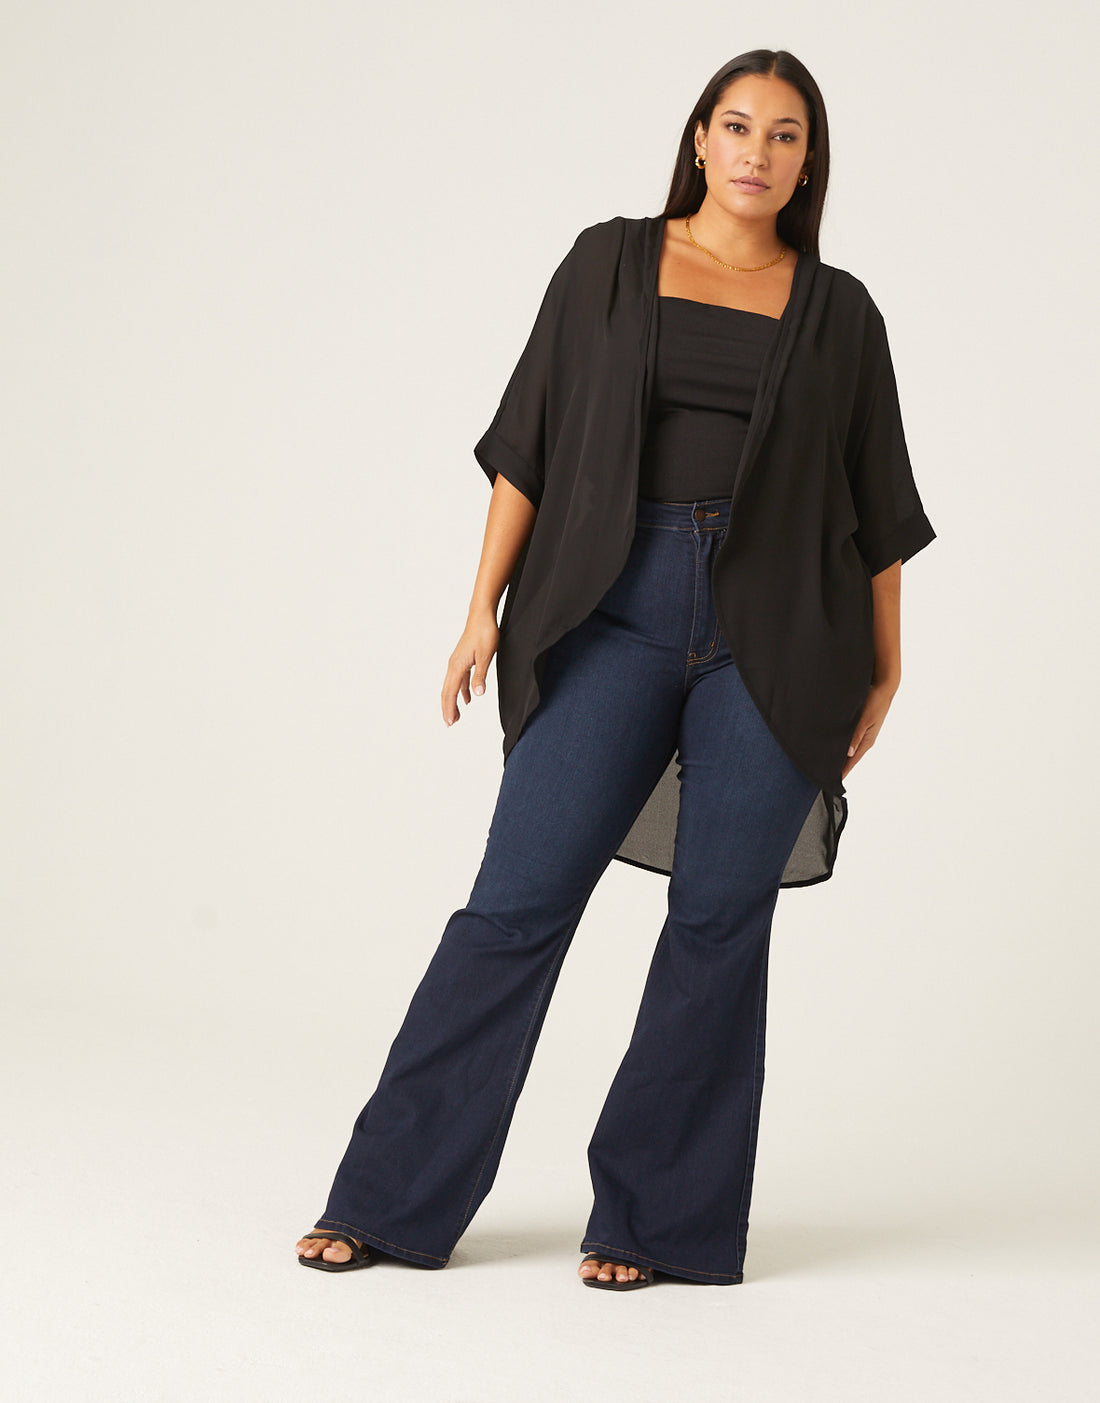 Curve Chiffon Open Front Cardigan Plus Size Outerwear Black 1XL -2020AVE